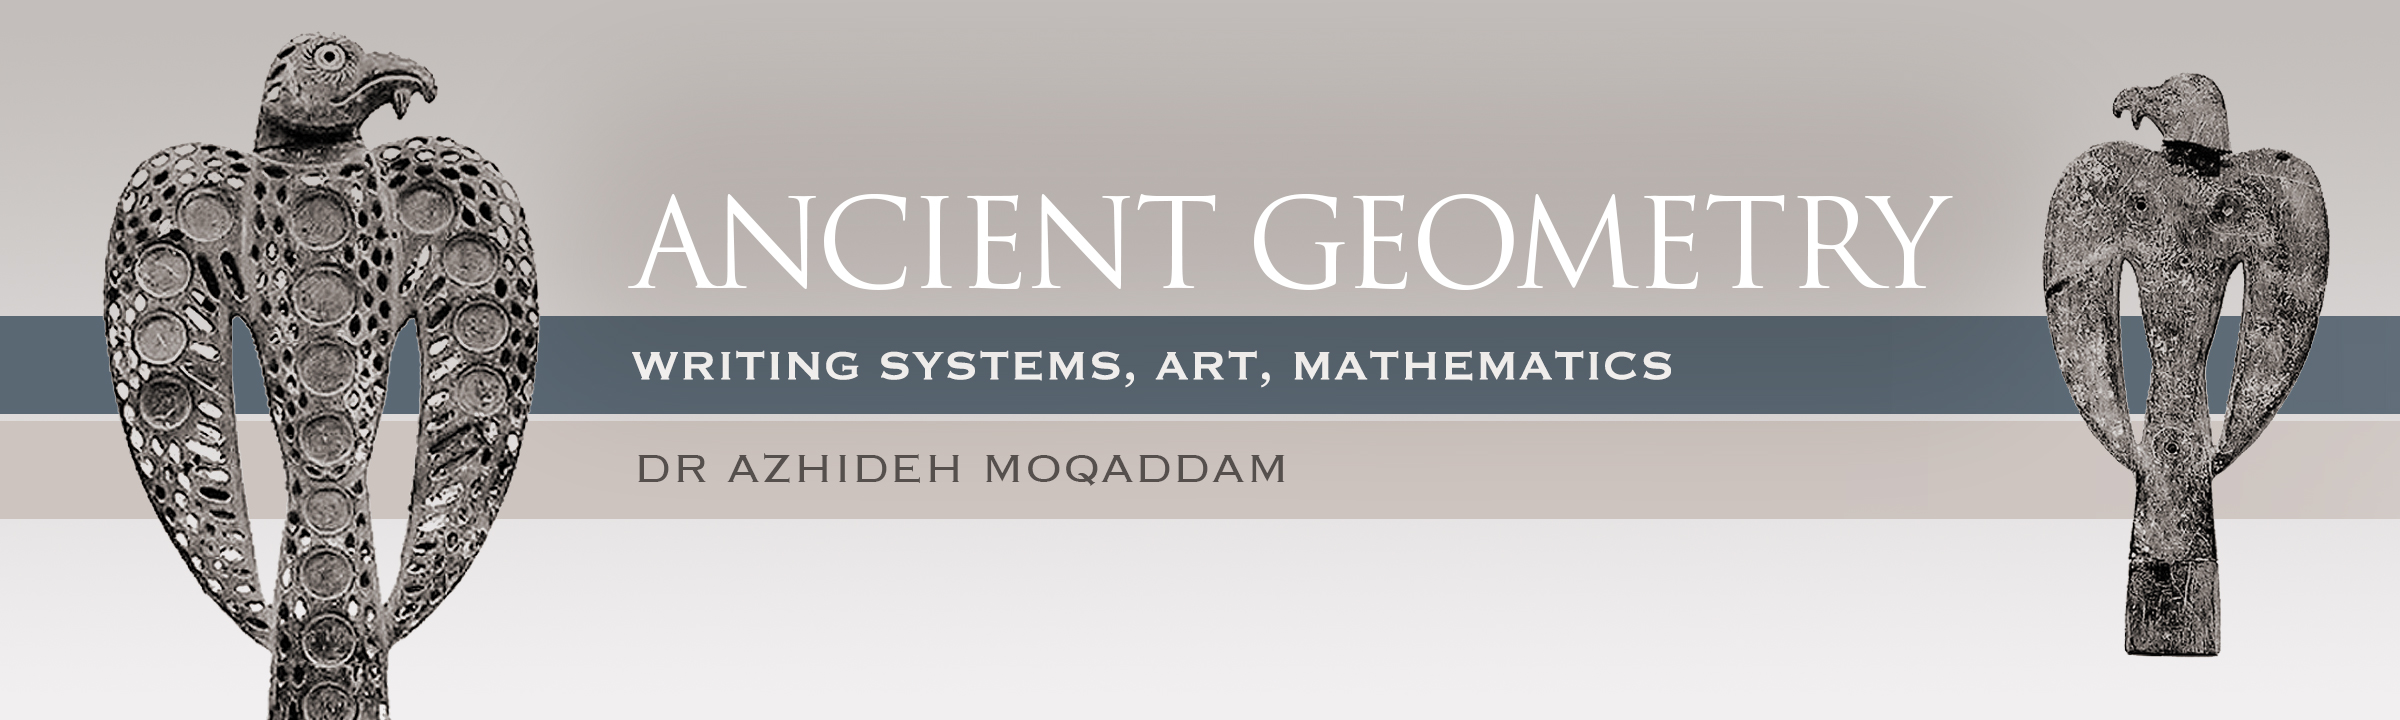 Ancient Geometry: Writing Systems, Art, Mathematics by Dr. Azhideh Moqaddam Bradshaw Foundation